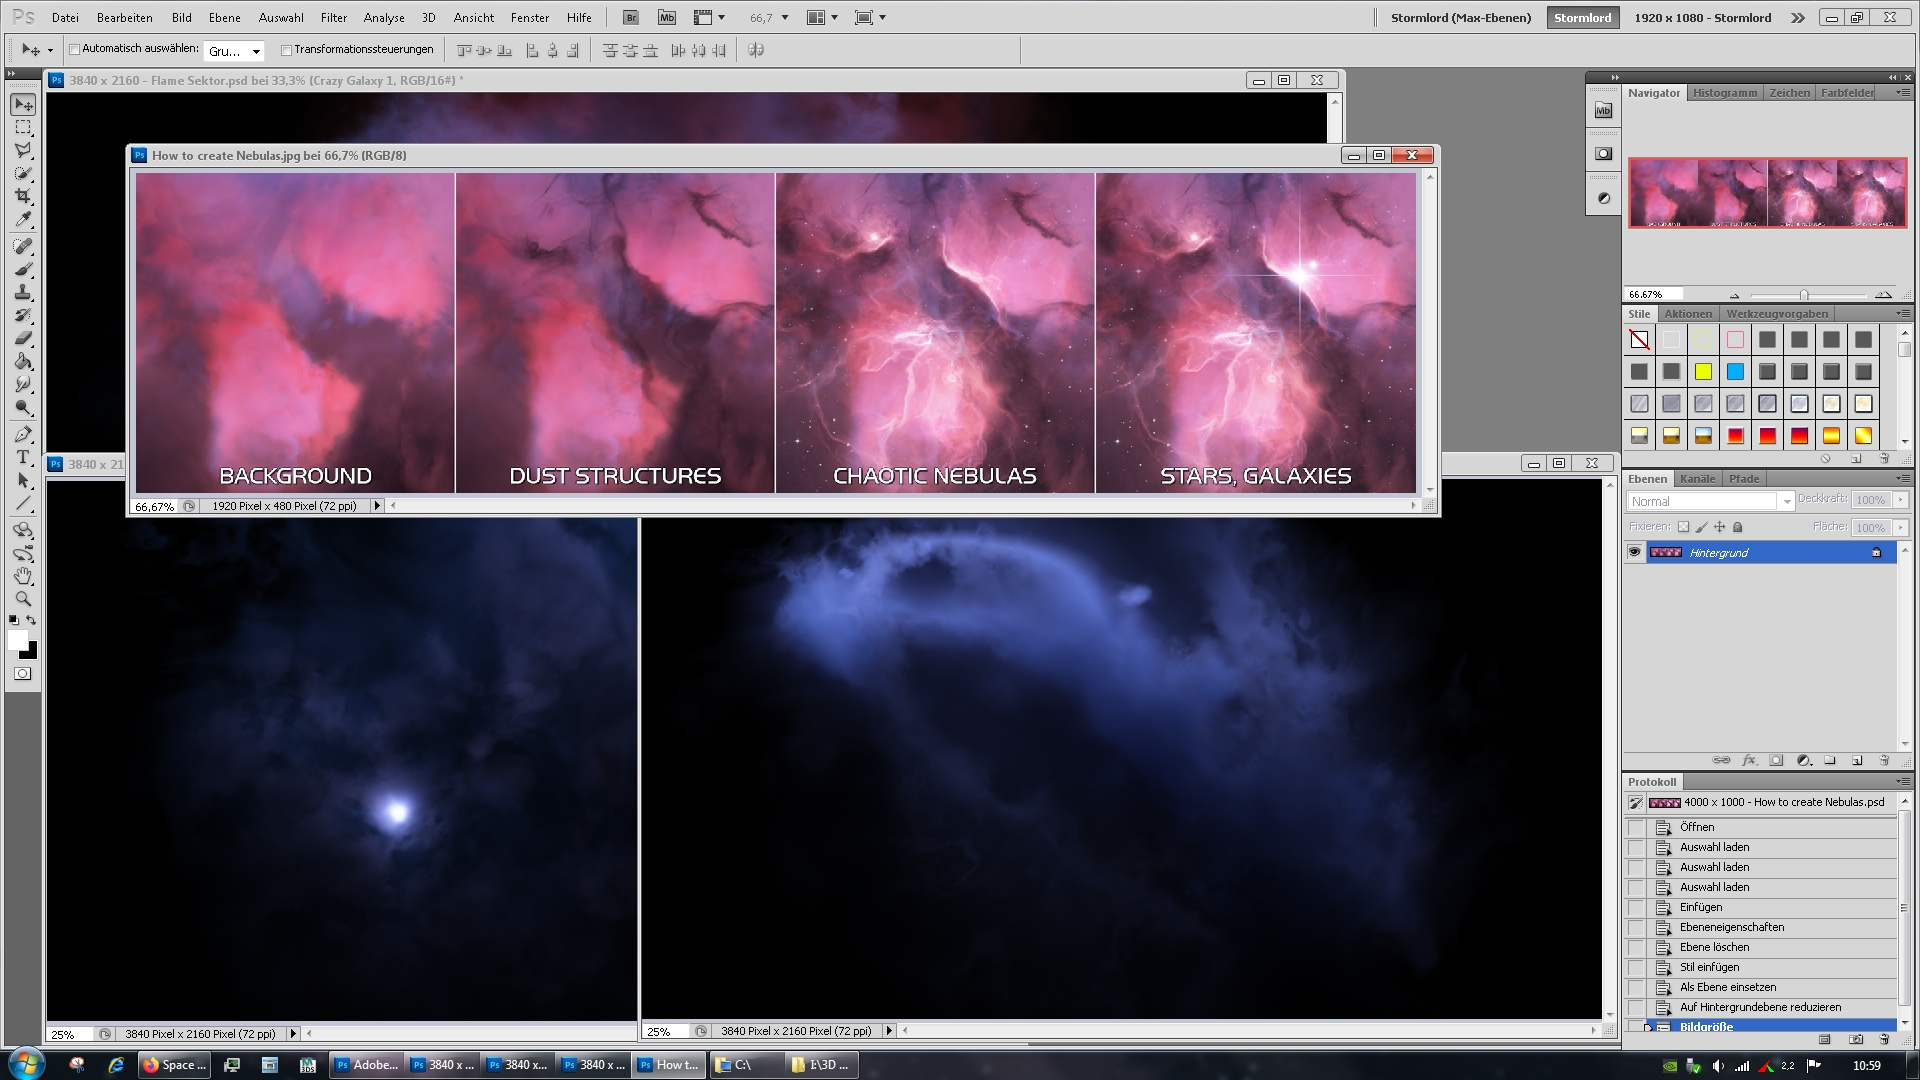 SCREENSHOT - How to create nebulas.jpg